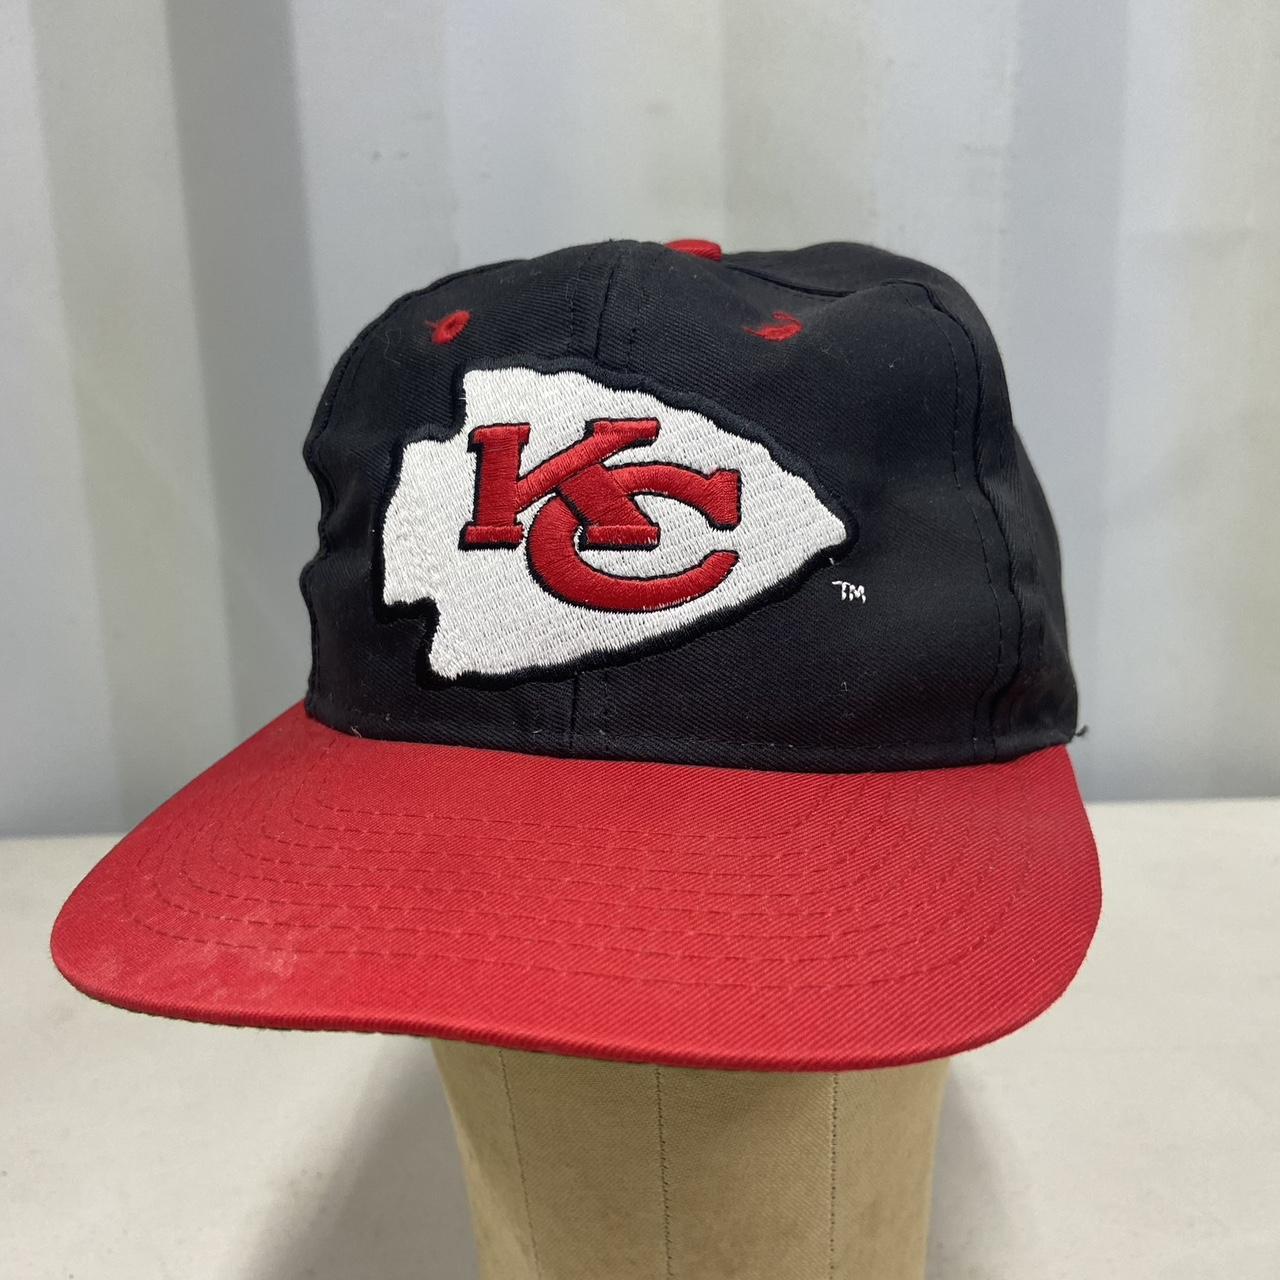 Kansas City Hat / Chiefs Hat / Kansas City Chiefs Vintage Cap Black